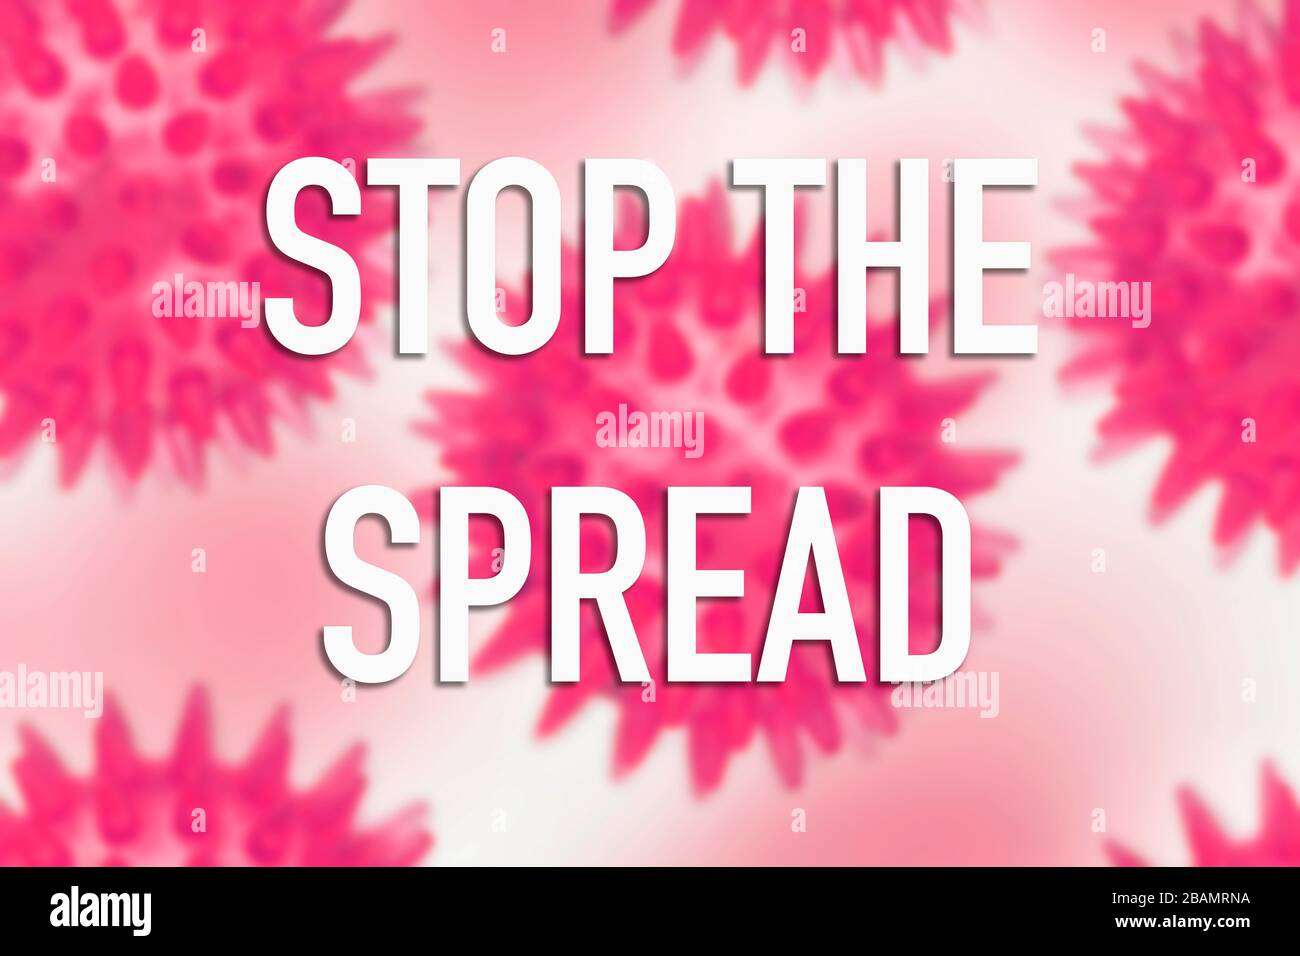 Stop the spread Coronavirus/Covid-19 illustration Stock Photo